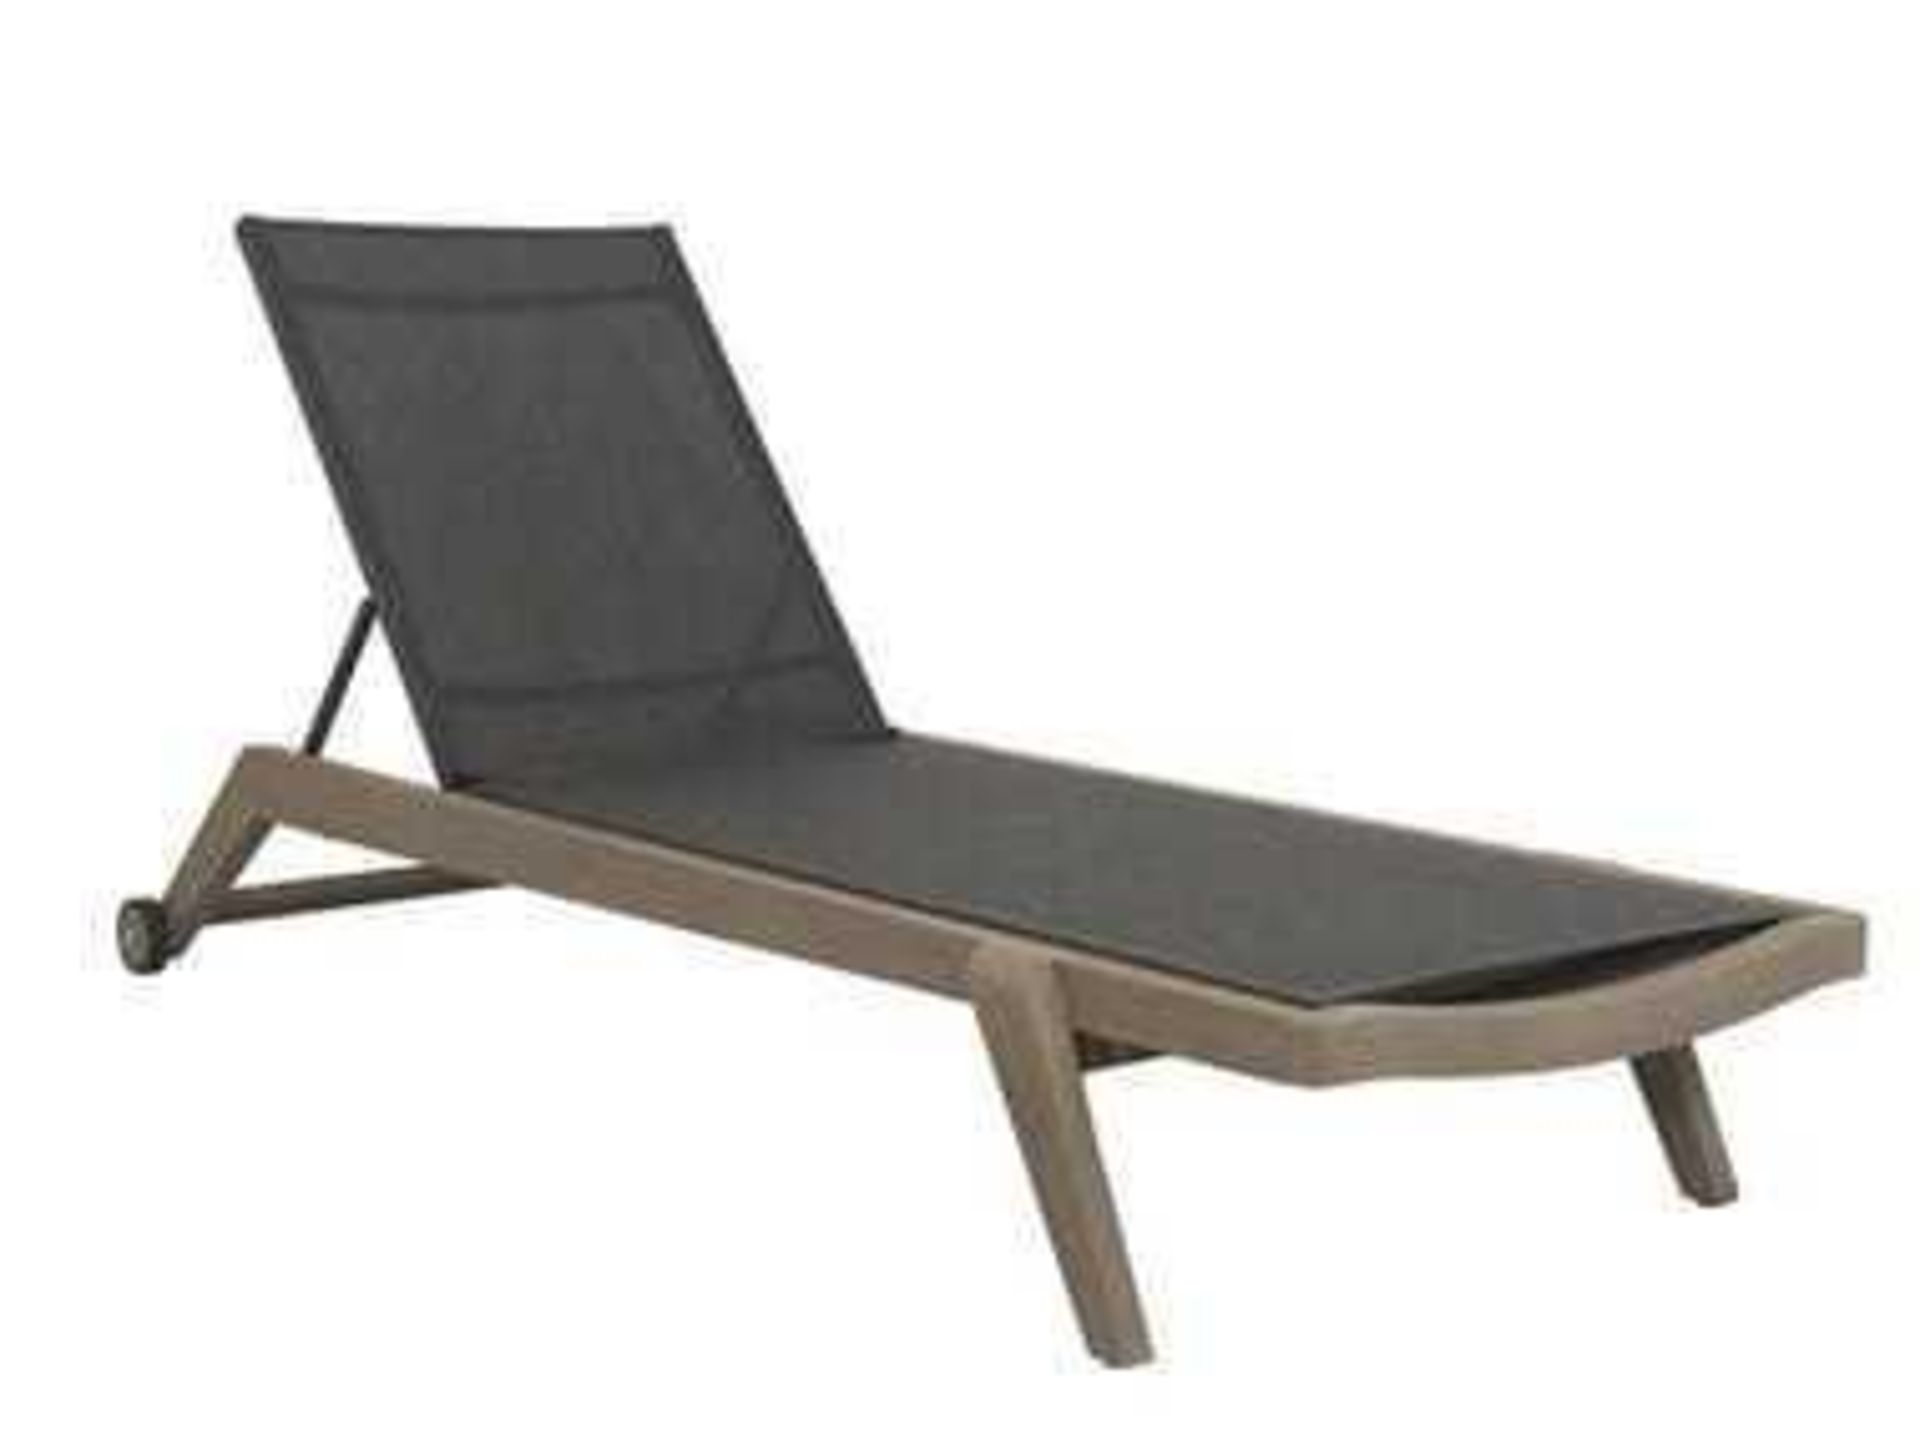 RRP £200 Boxed Backyard Furniture Copenhagen Rattan Wicker Sunlounger With Cushions And Weatherproof